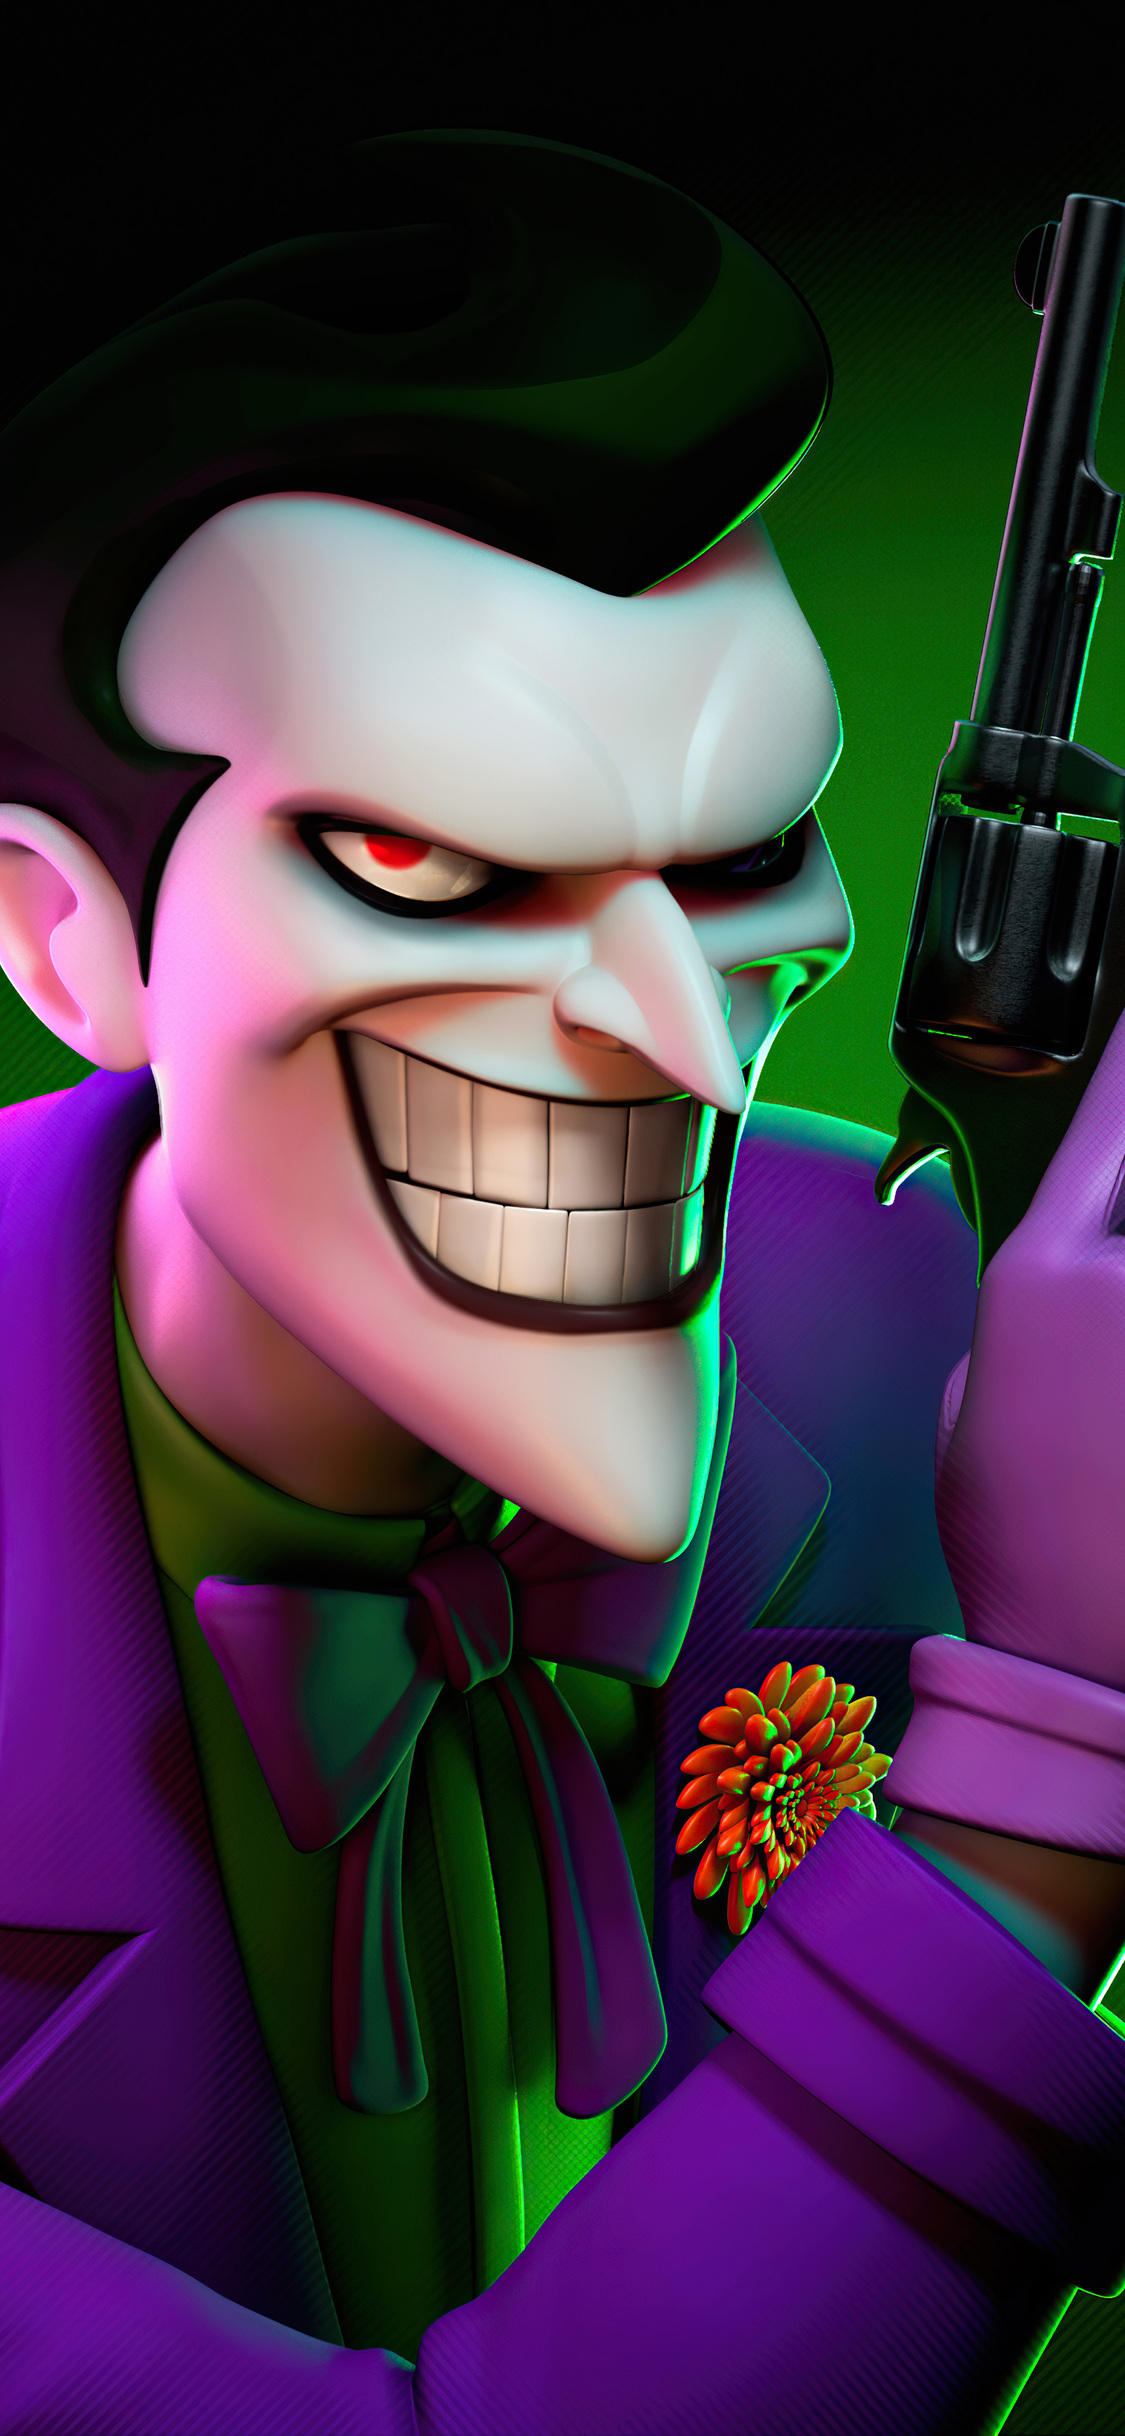 Joker 2019 Movie Cave iPhone Wallpapers Free Download